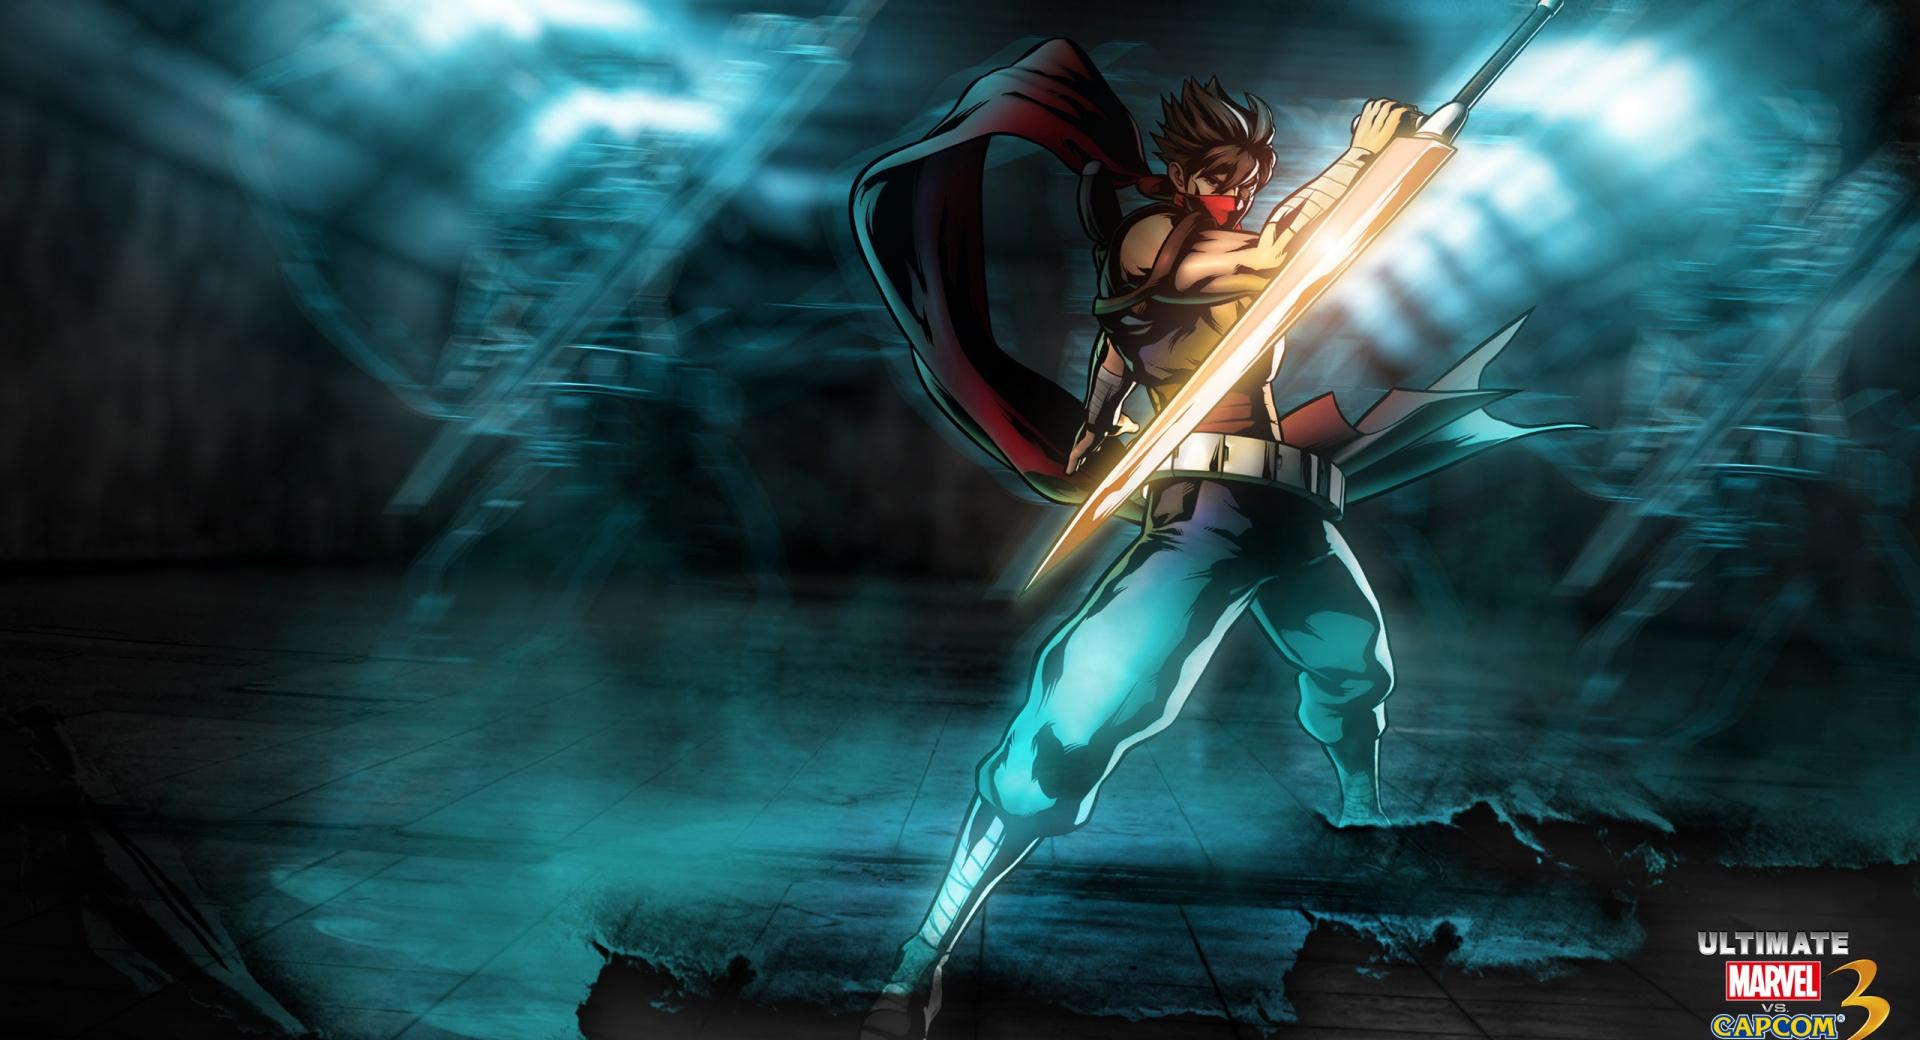 Marvel vs Capcom 3 - Strider Hiryu at 1024 x 1024 iPad size wallpapers HD quality